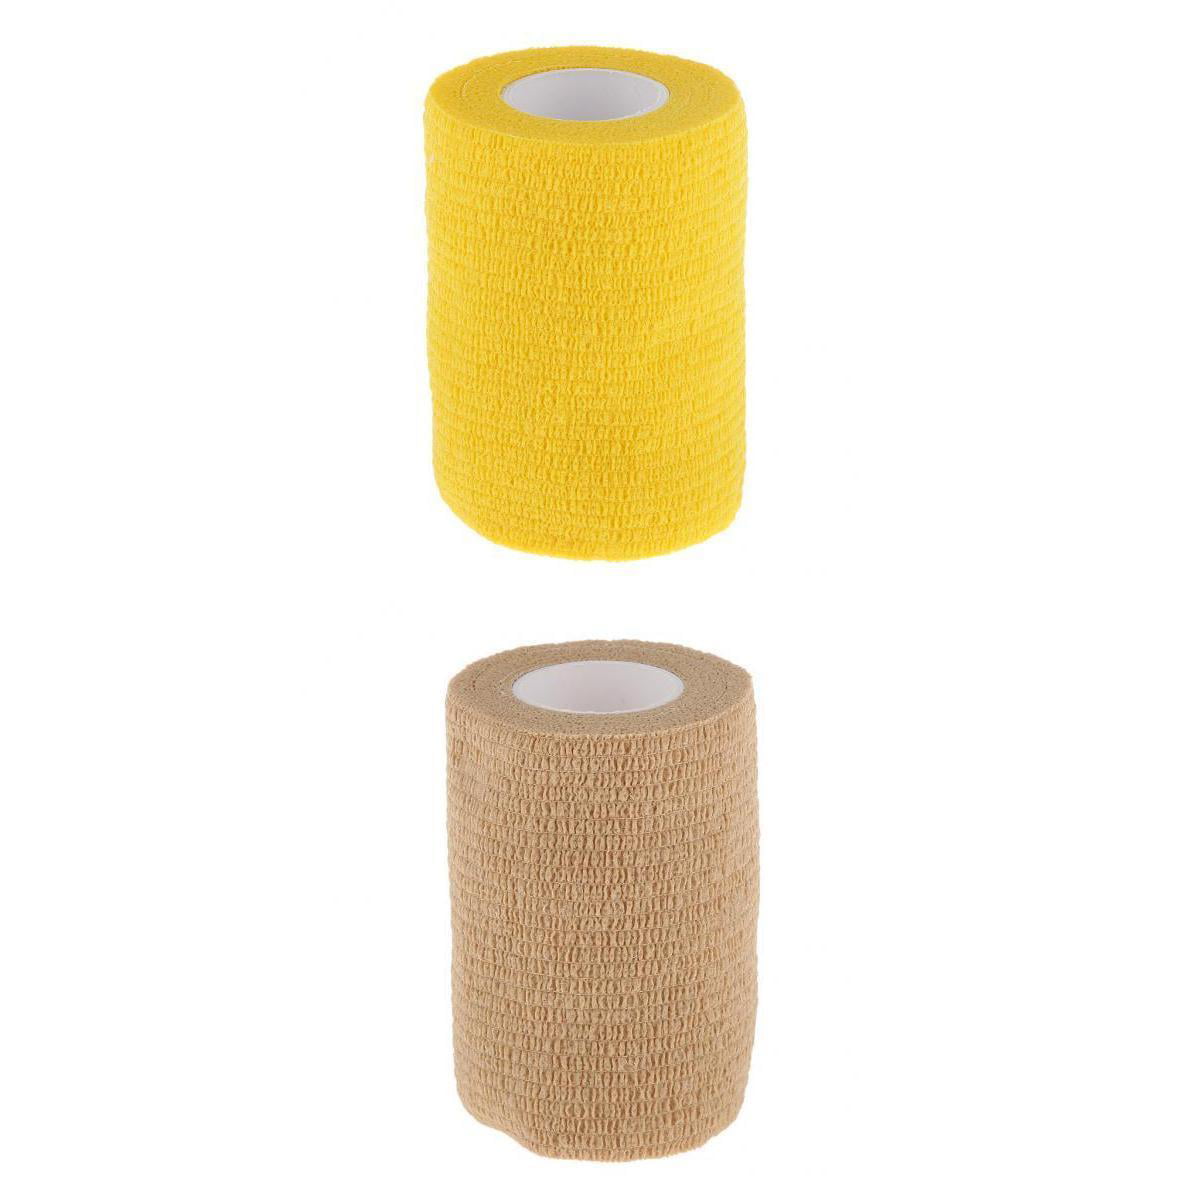 2 Rolls of Yellow Cohesive Gauze Tape Pro Quality 1.5" x 30' 